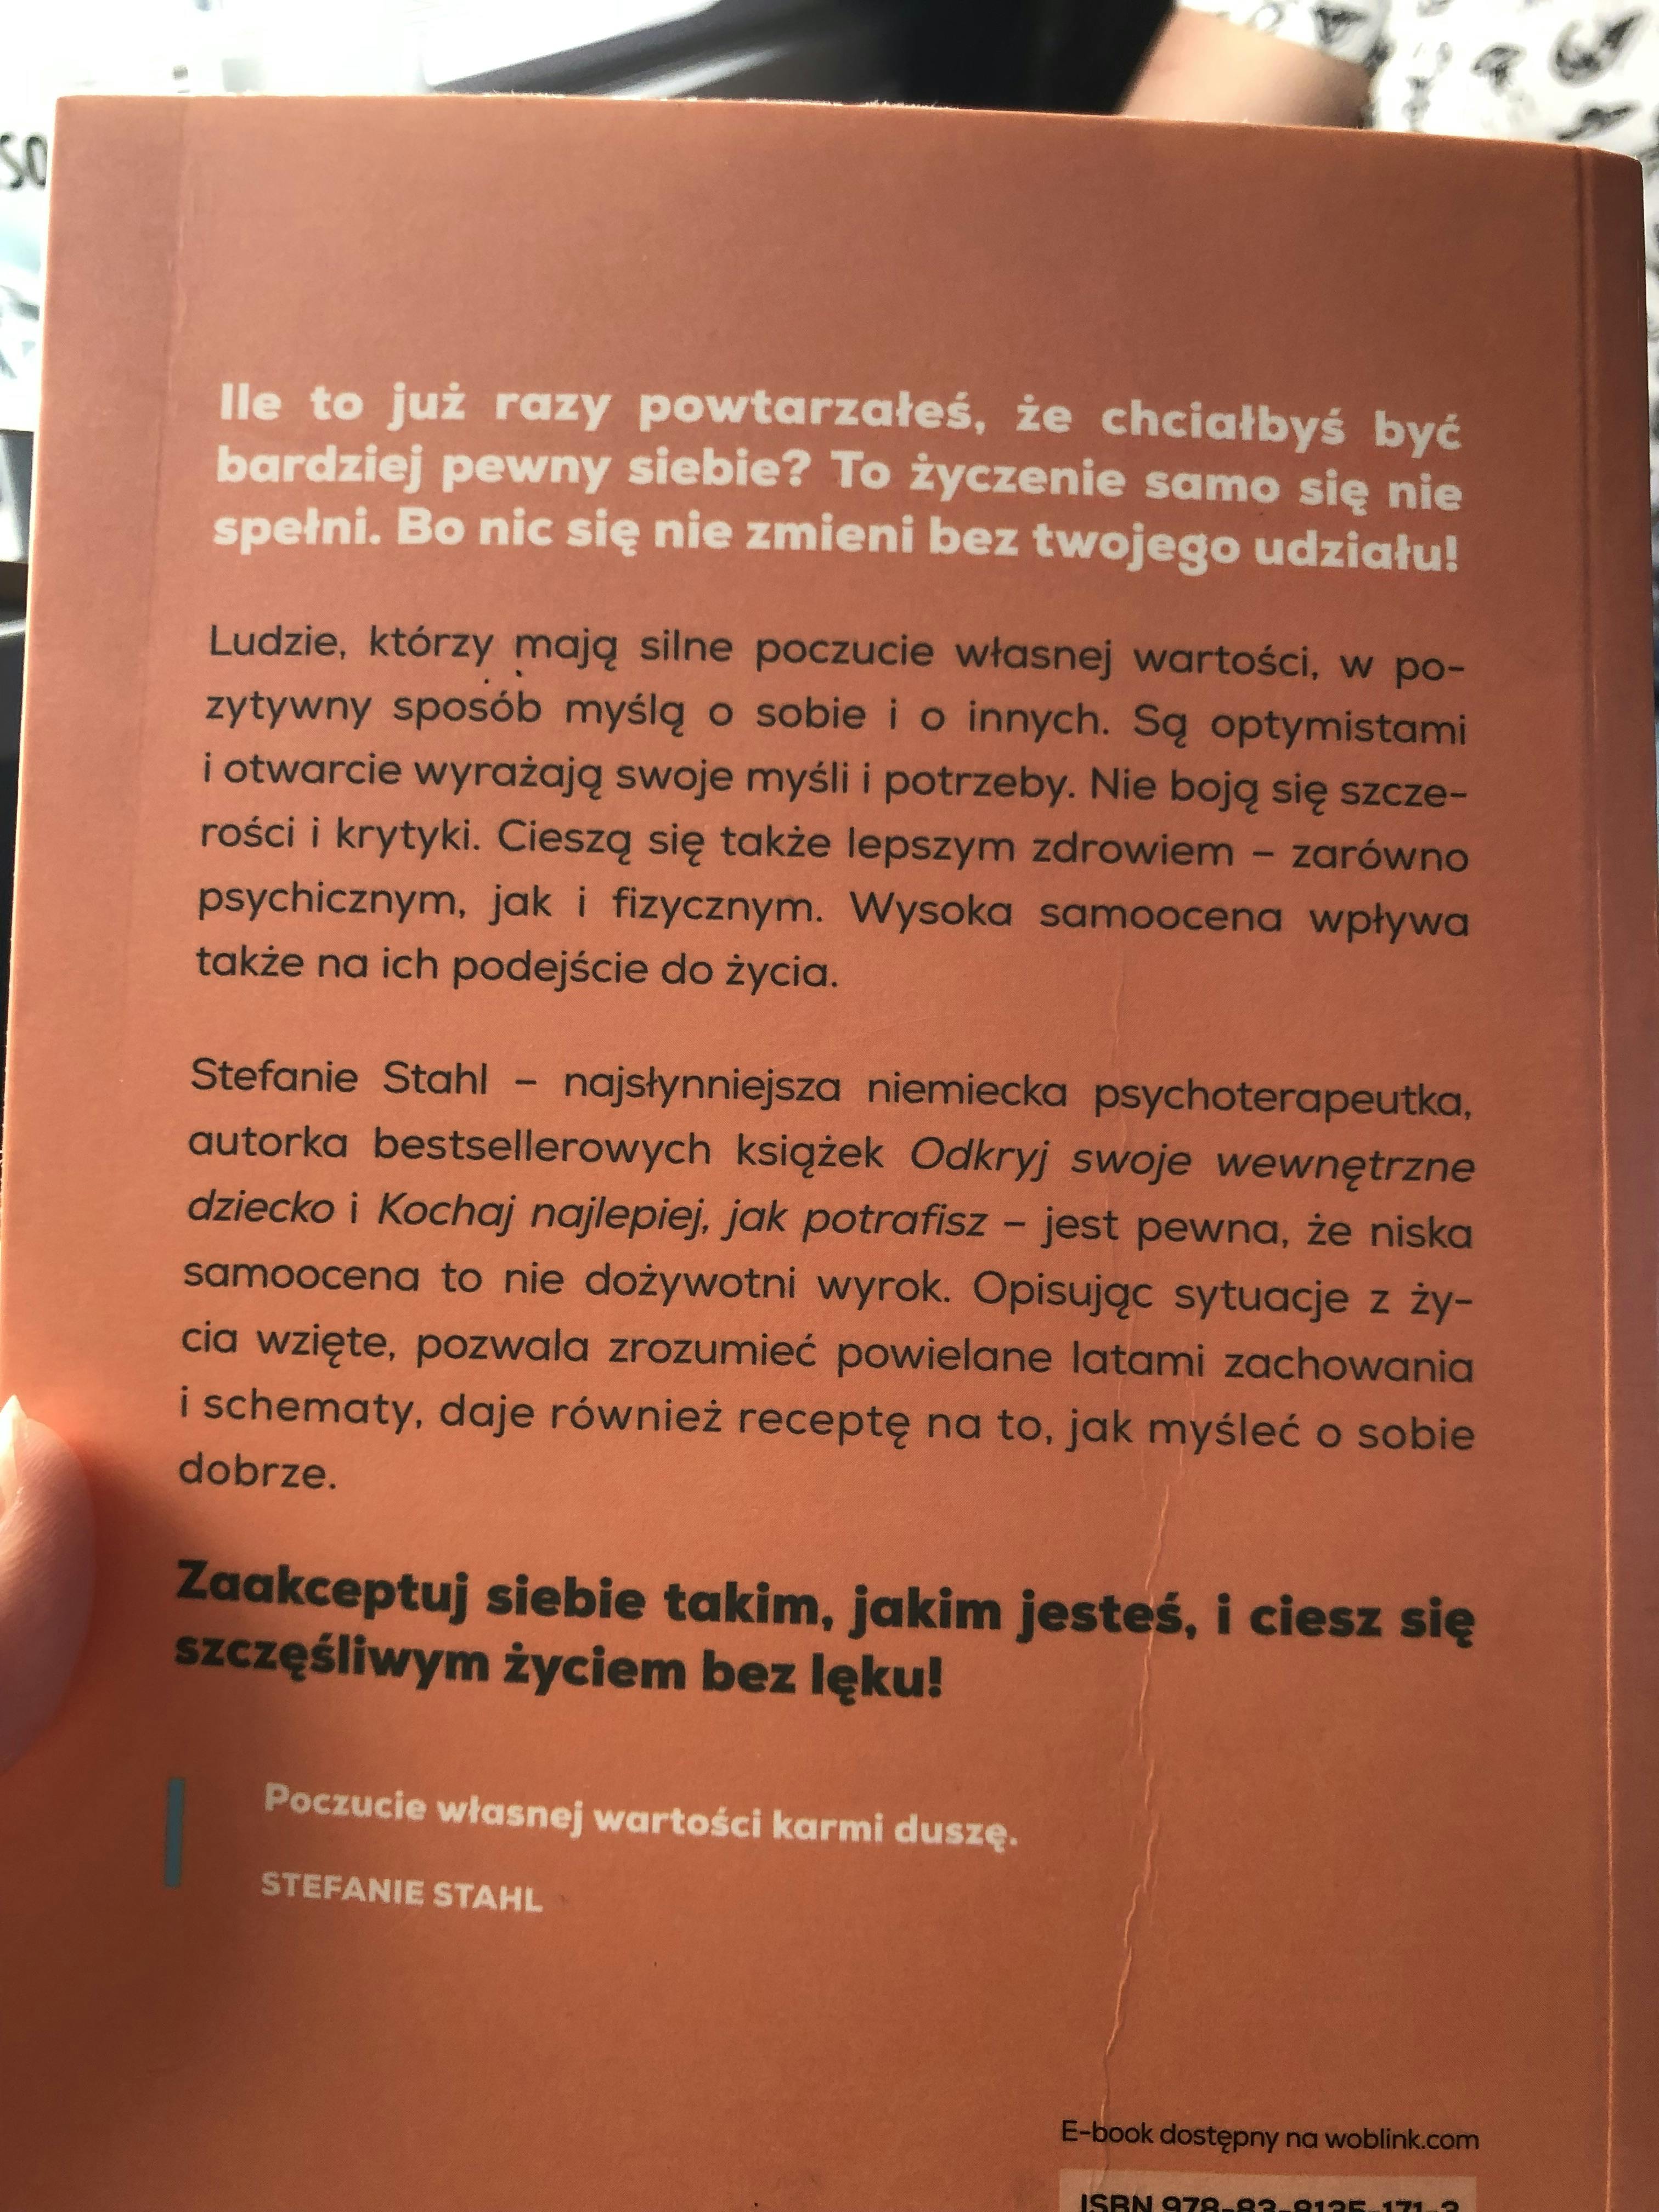 Picture of Książka ,,Jak myśleć o sobie dobrze”